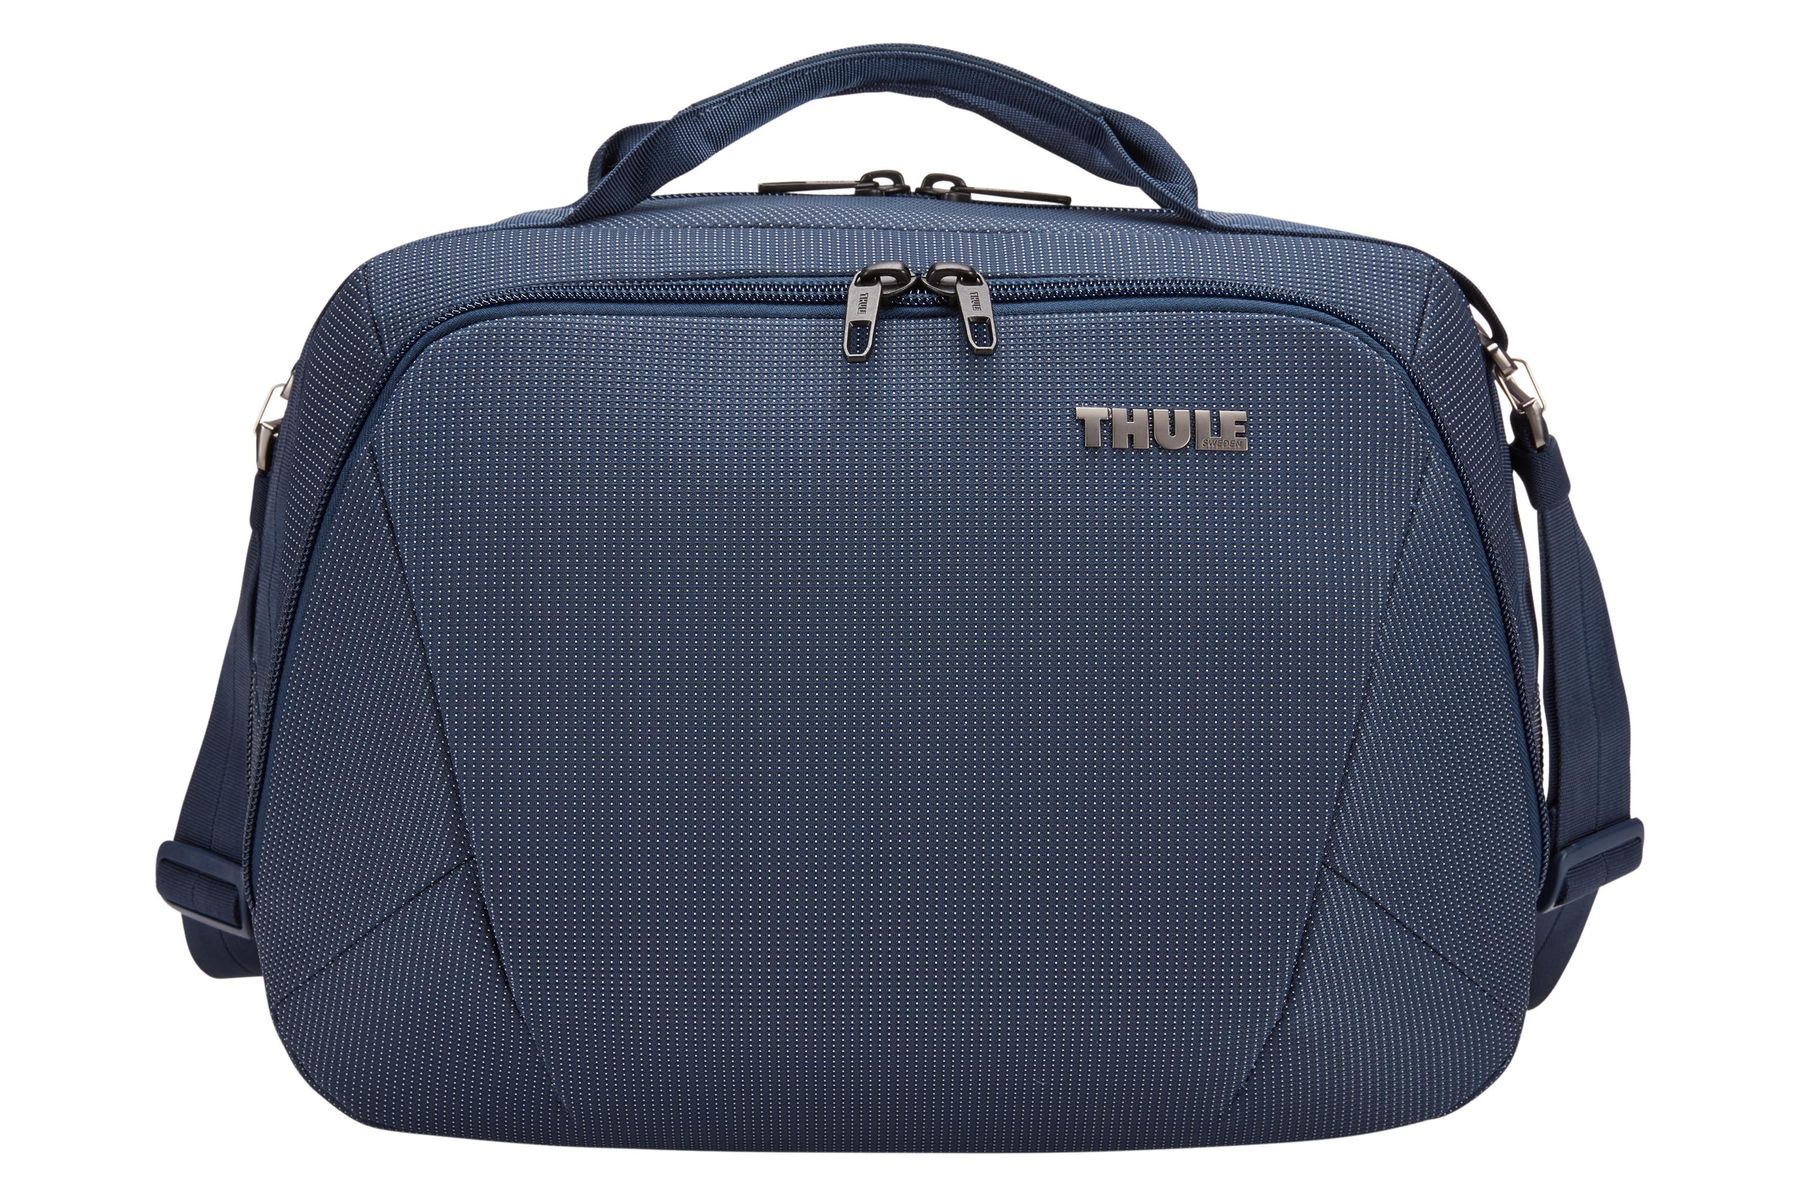 Thule Crossover 2 Boarding Bag